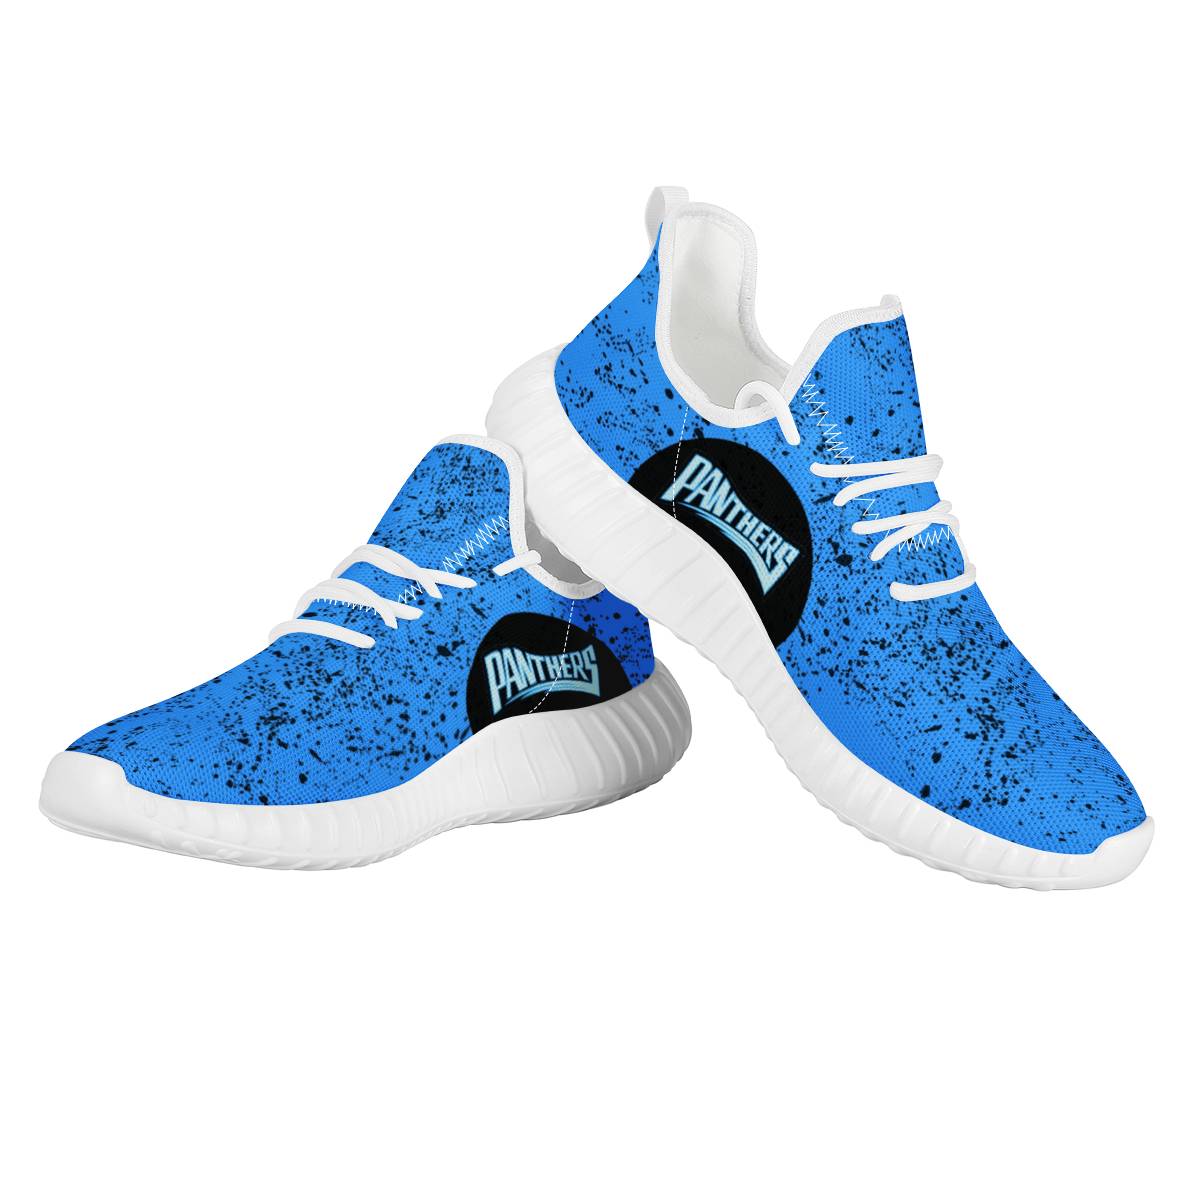 Women's Carolina Panthers Mesh Knit Sneakers/Shoes 002